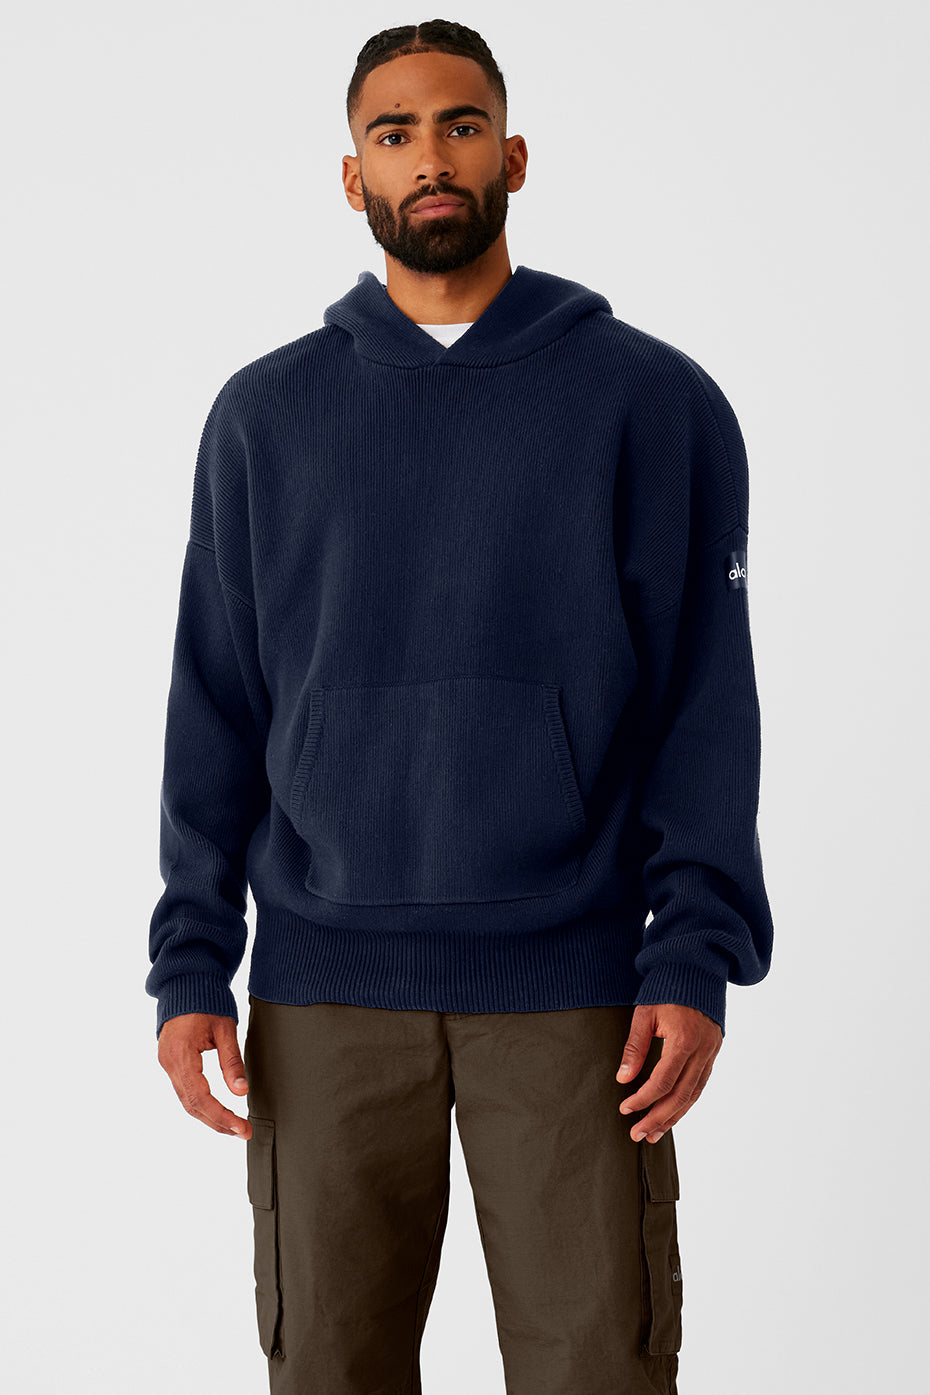 Scholar Hooded Sweater - Navy - Navy / XS